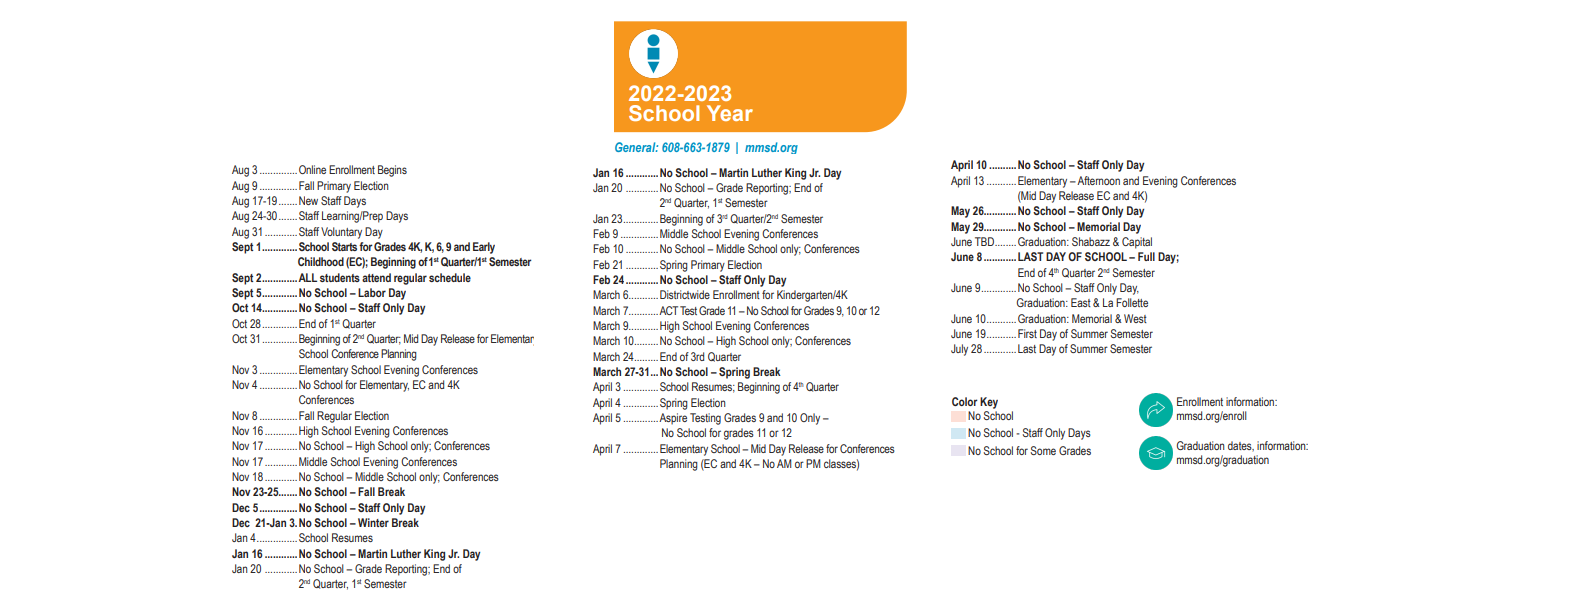 District School Academic Calendar Key for Emerson Elementary